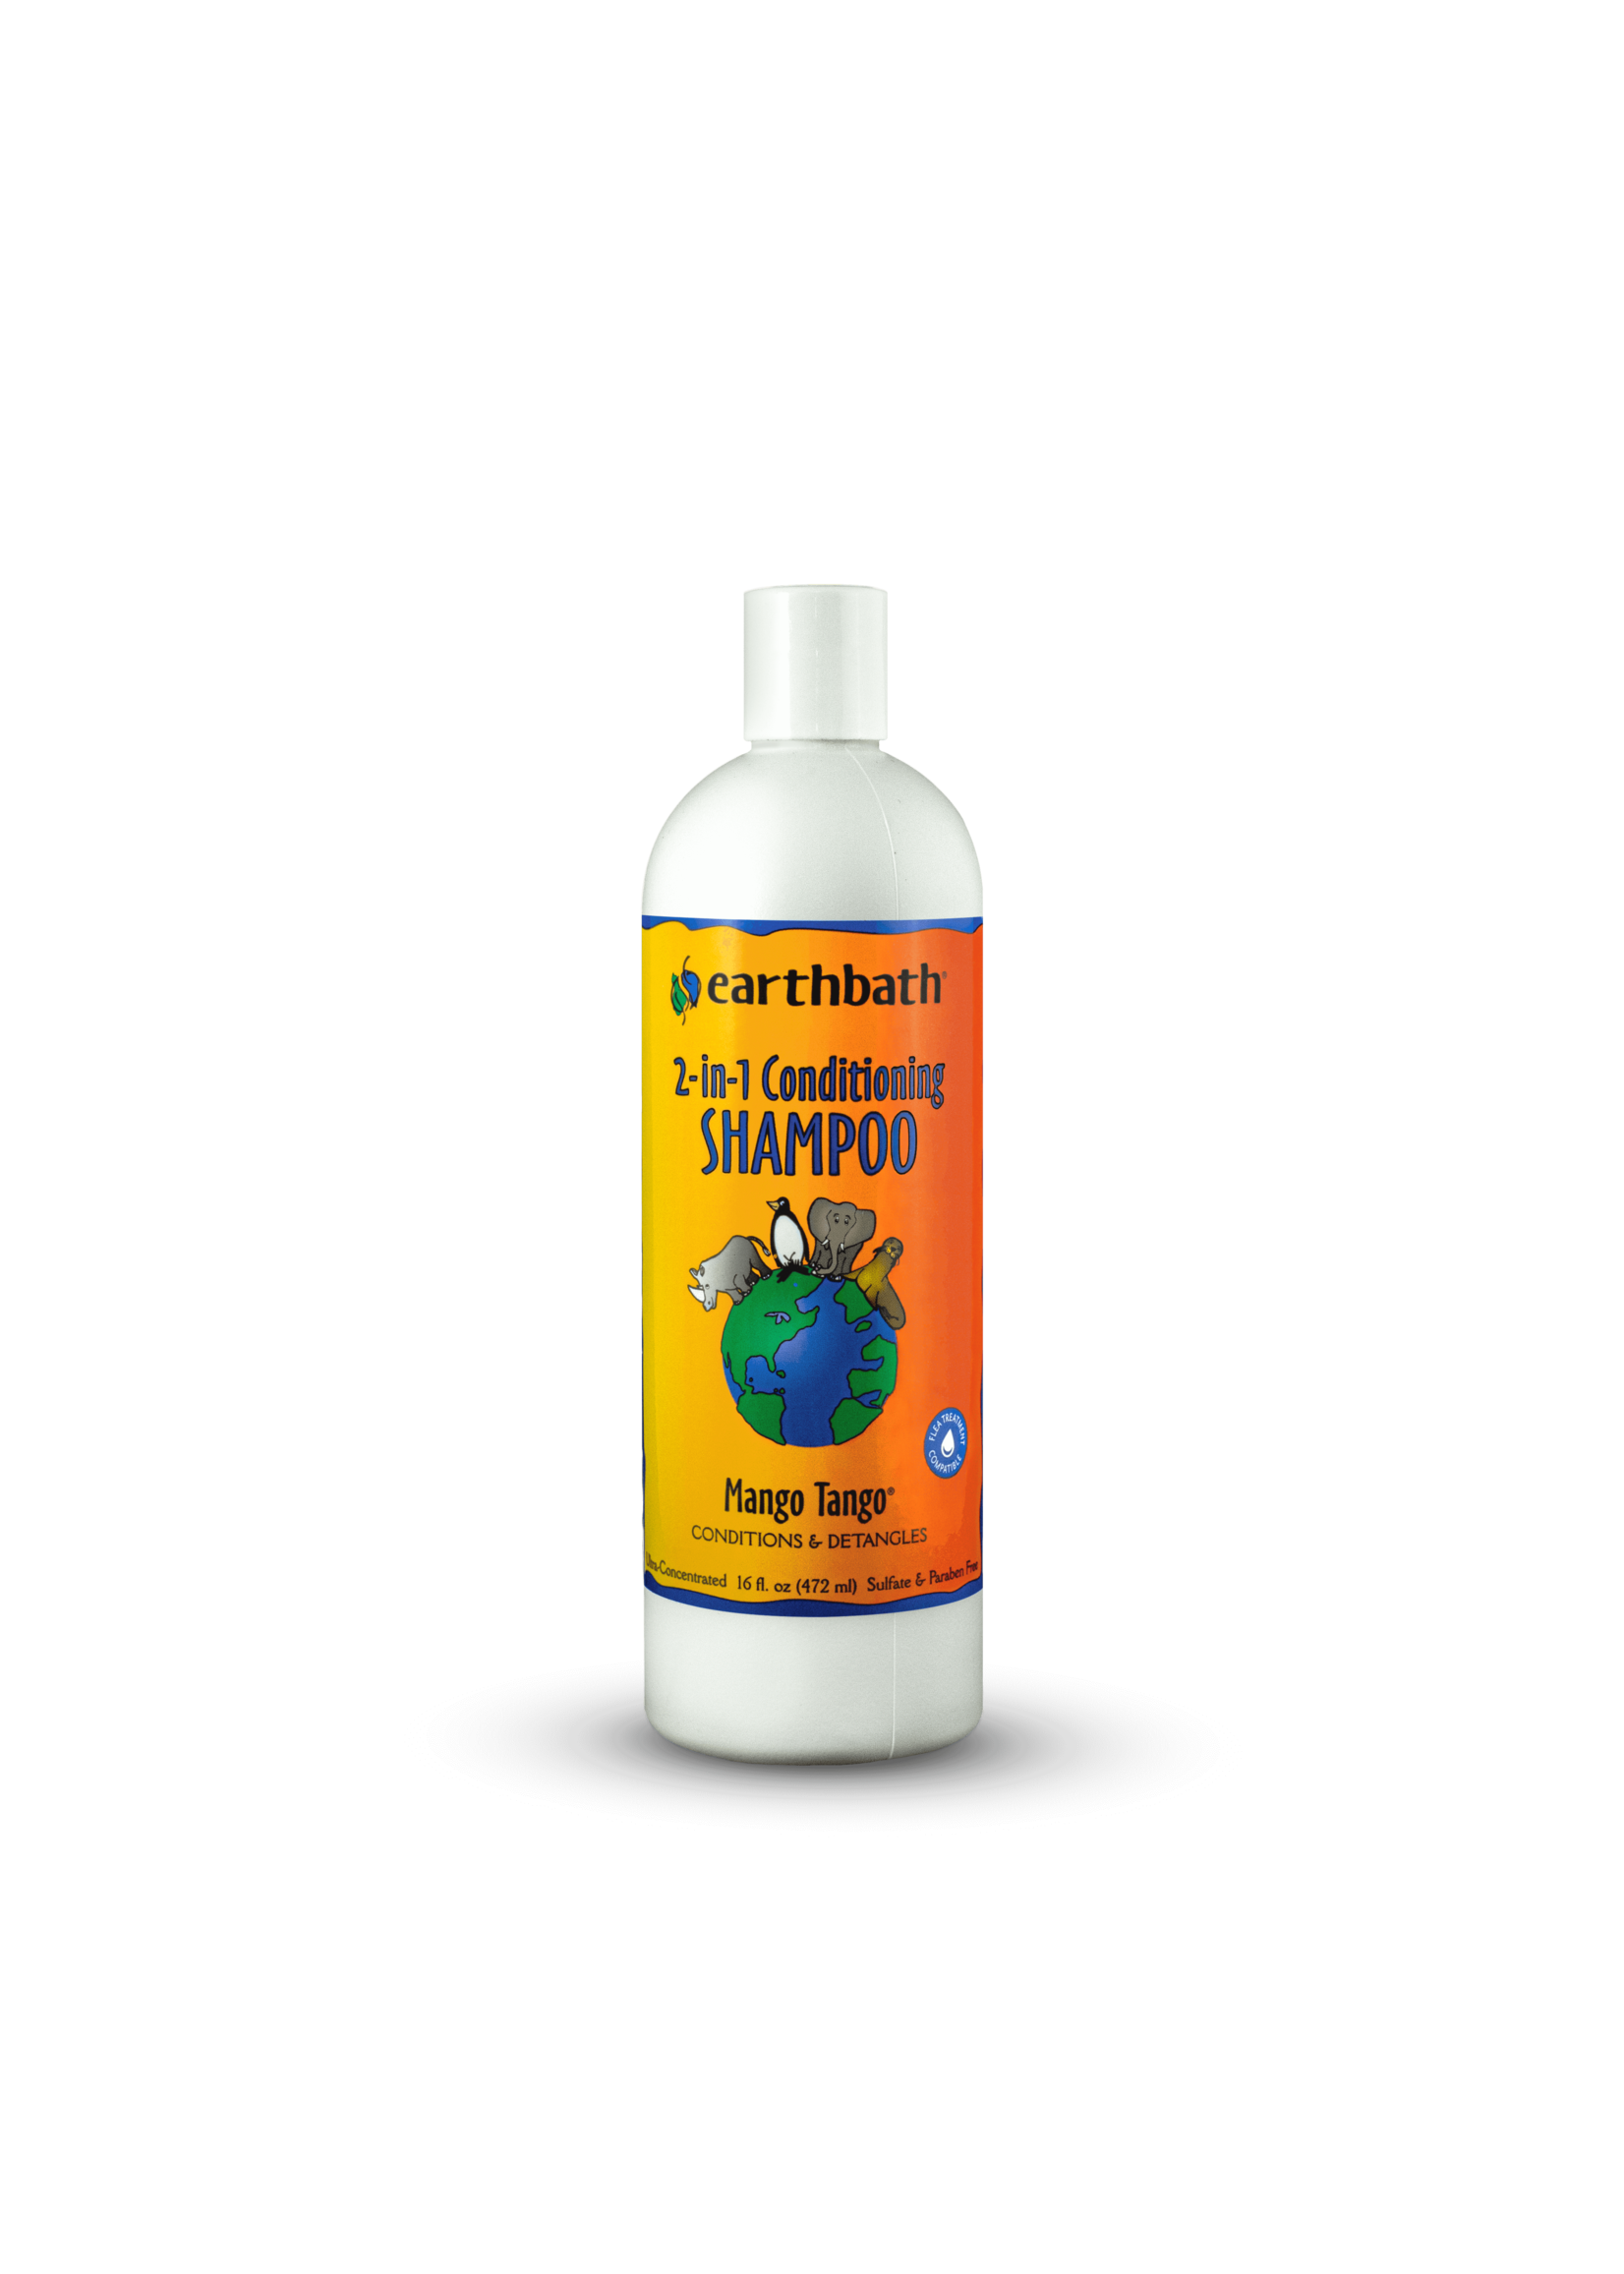 Earthbath Conditioning Shampoo Mango Tango